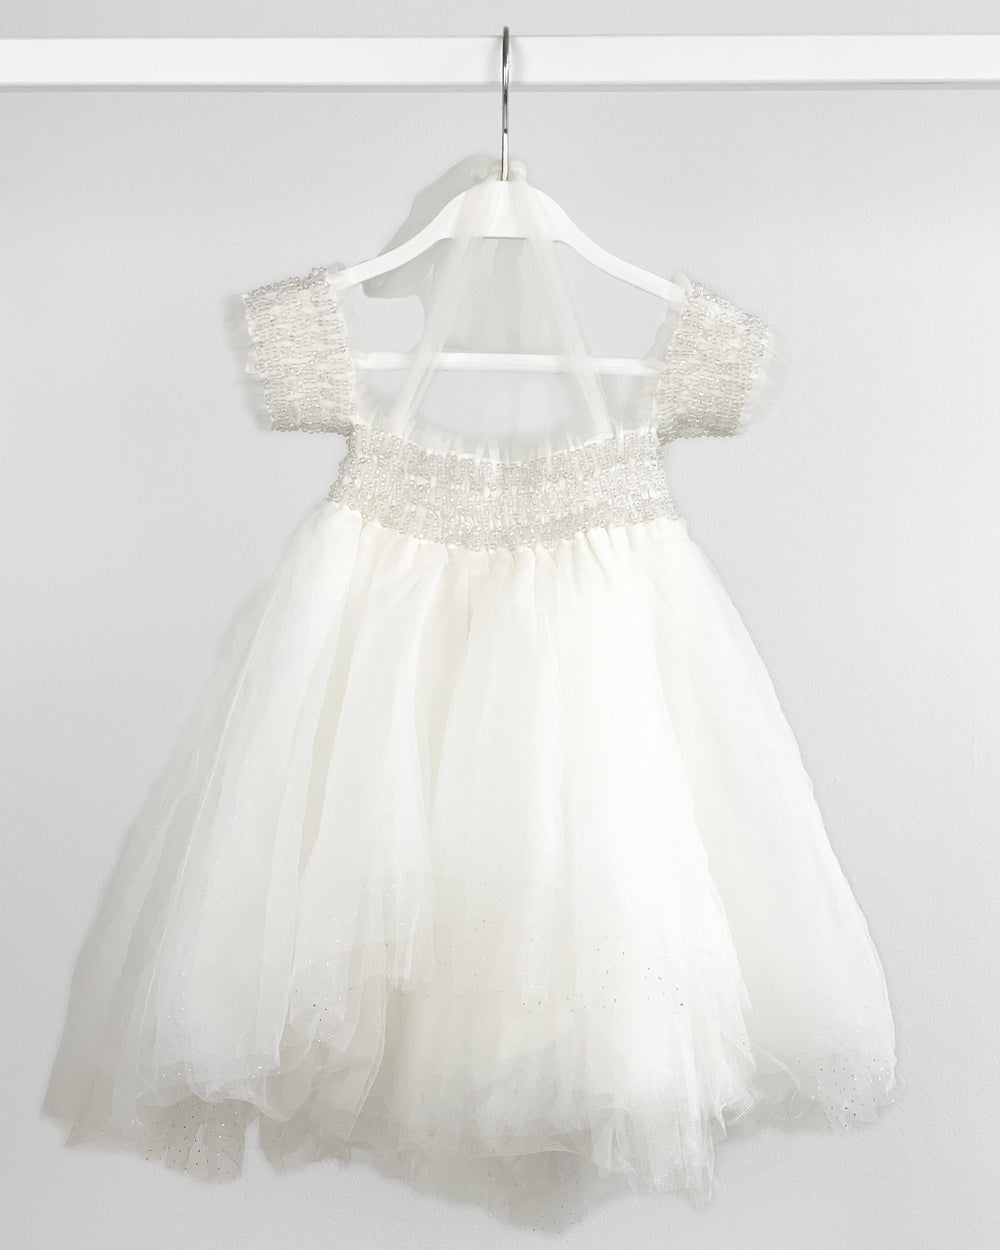 Luna Luna "Elise" White Beaded Sparkle Tulle Dress | Millie and John